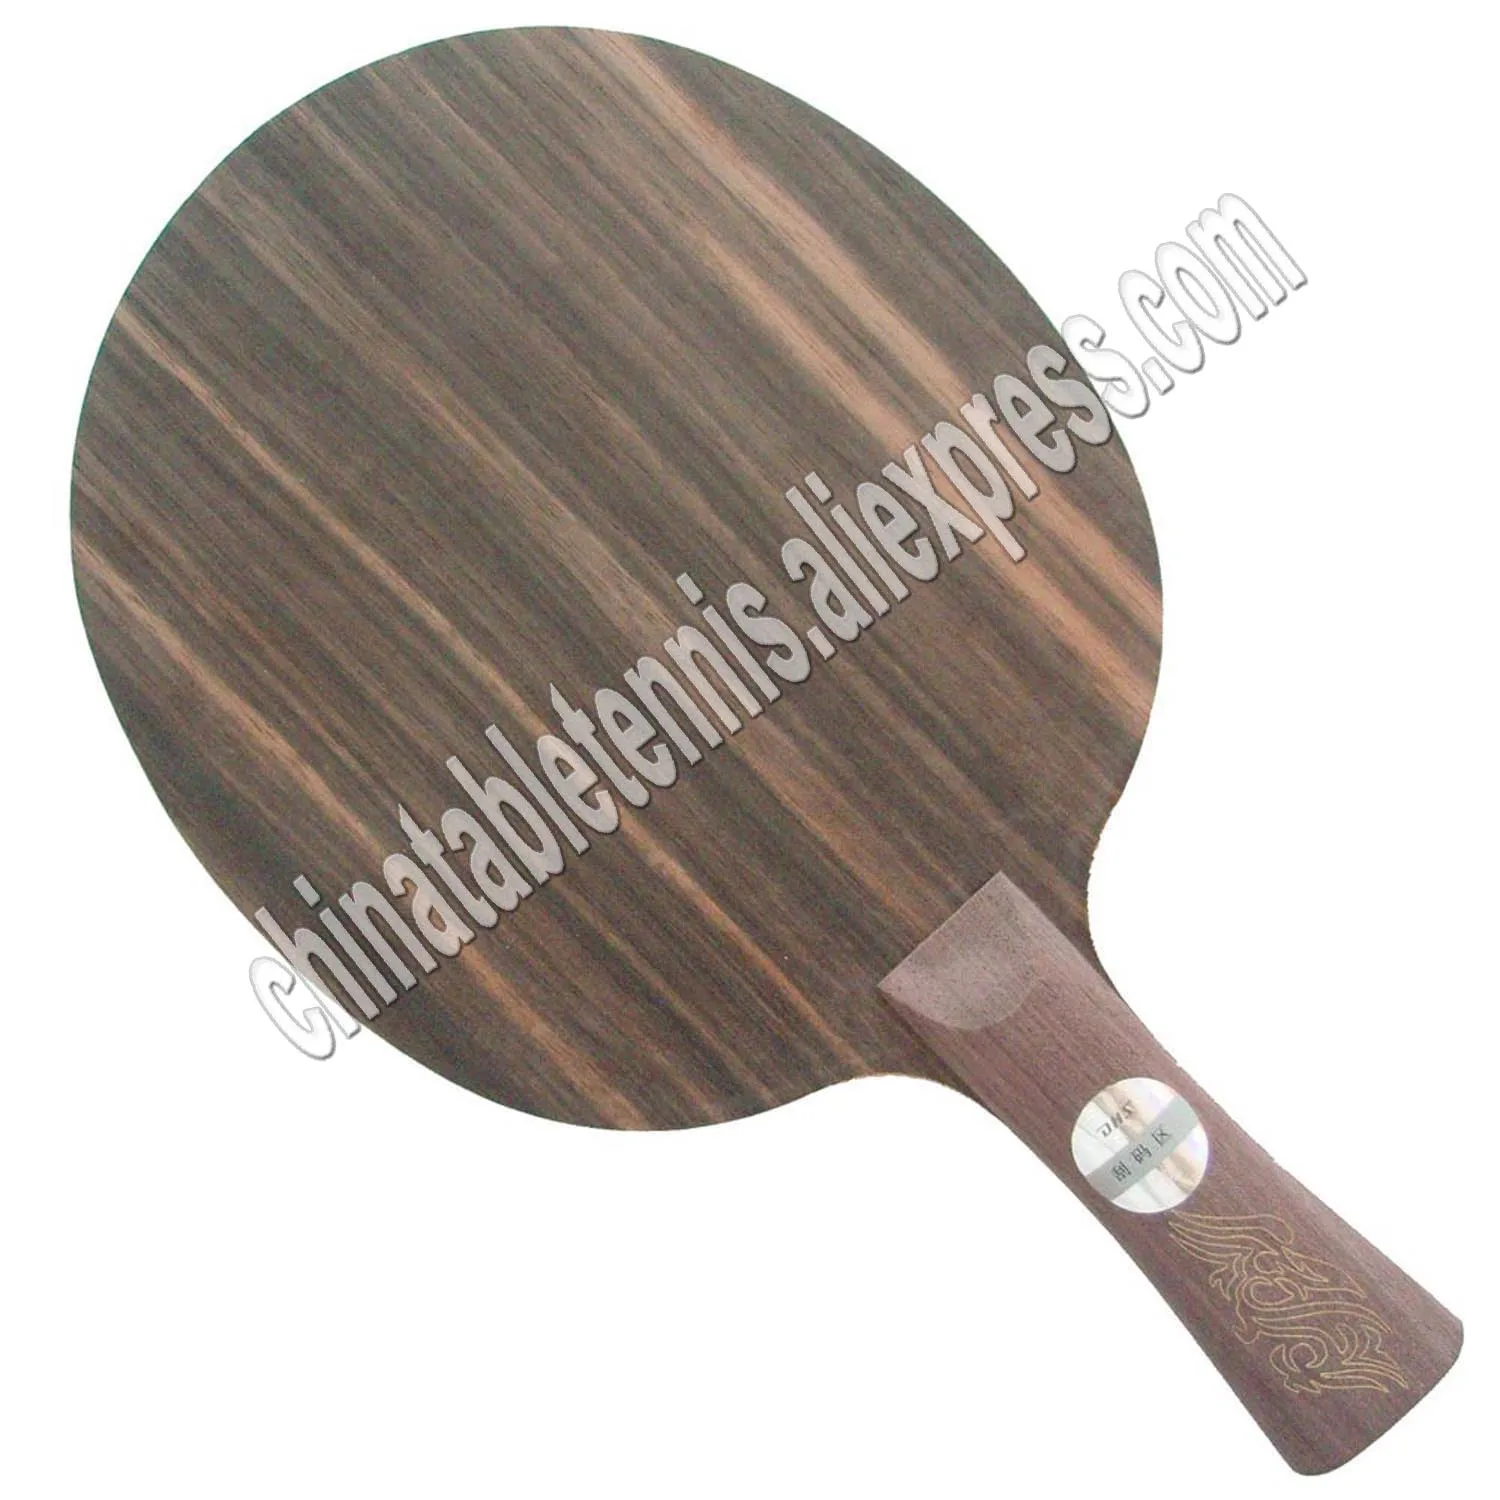 Dhs Hurricane Ning Ding Ning Used Table Tennis Blade 5 Ply Ebony Racket Ping Pong Bat Paddle - Table Tennis Rackets